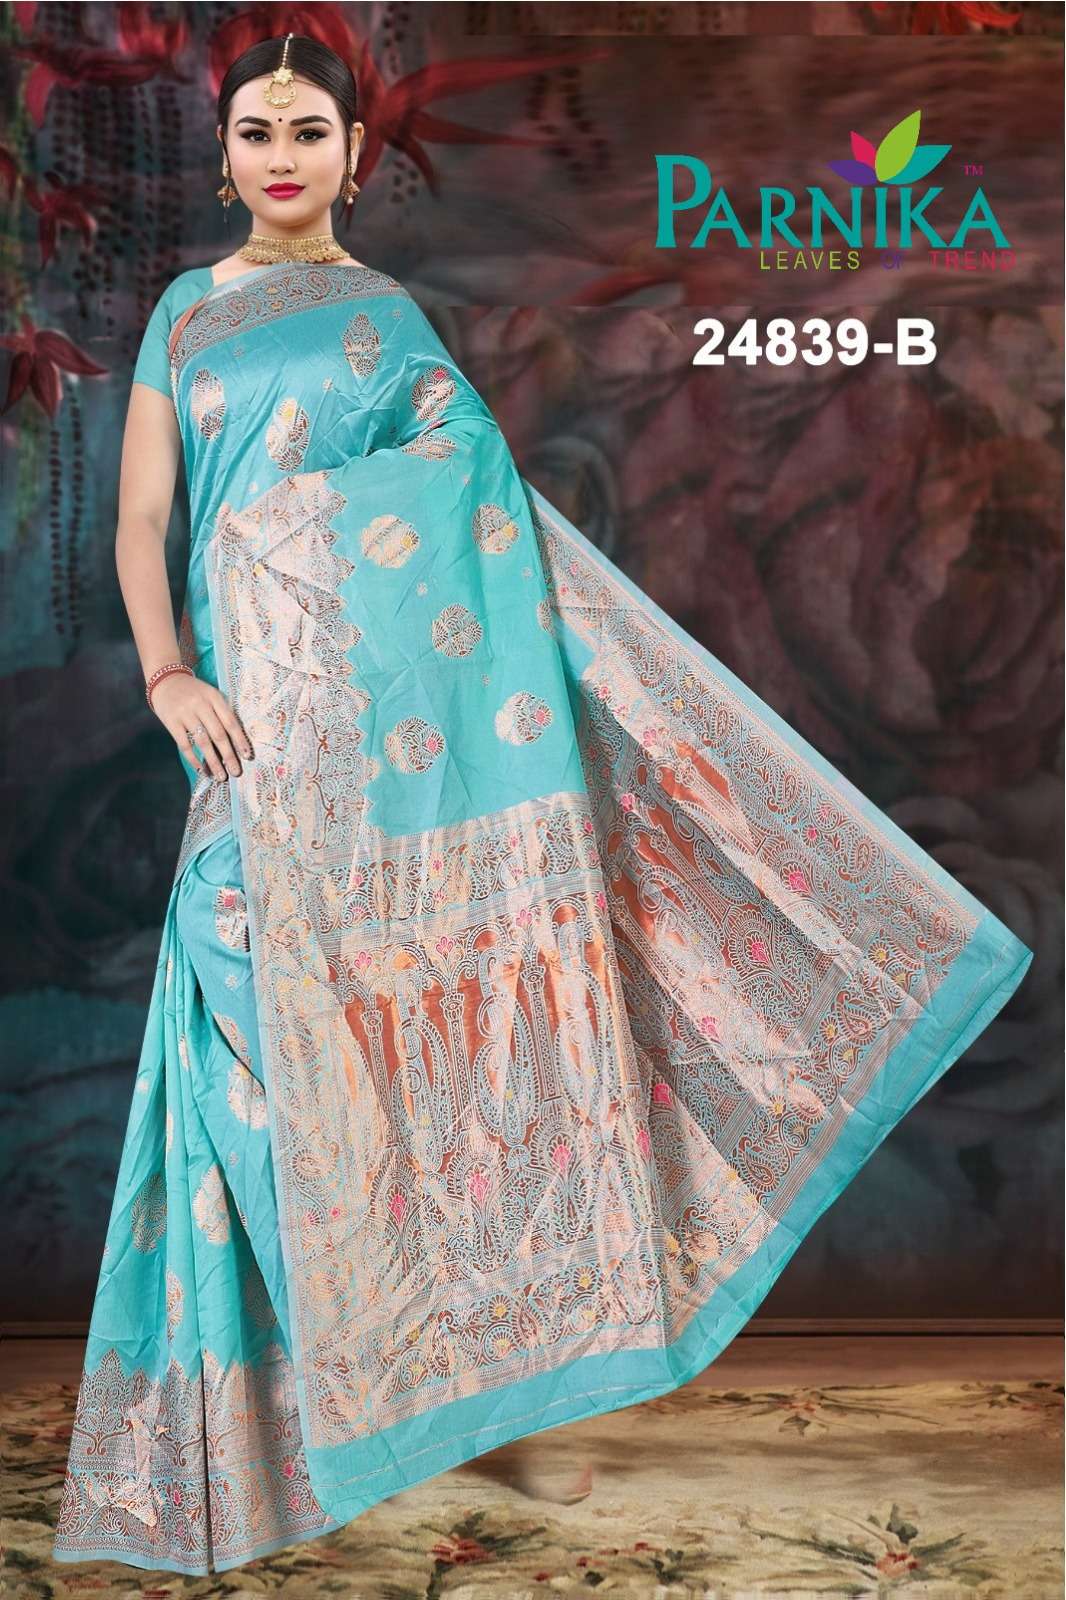 Parnika India Lichi Silk Jacquard Sarees Festive Wear Wedding Saree for Women - 24839